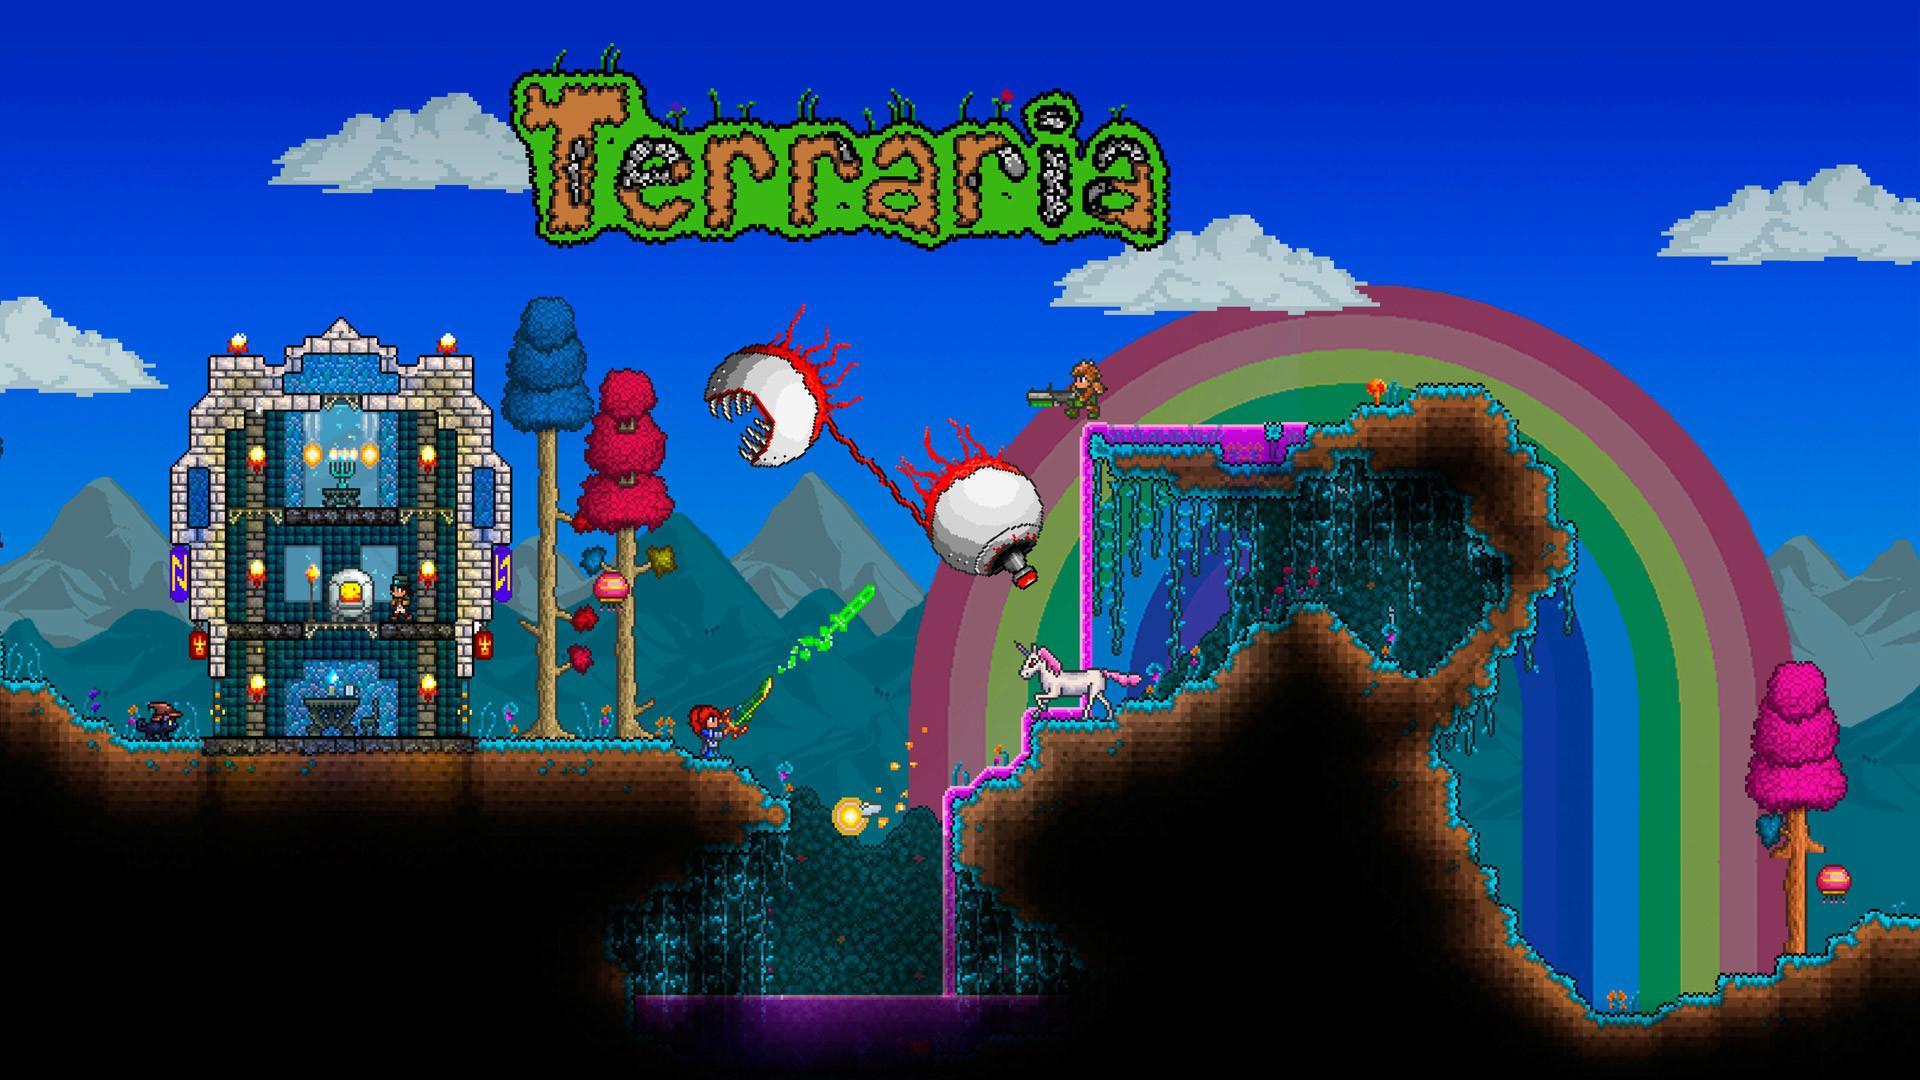 terraria pc free download 1.3.5.3